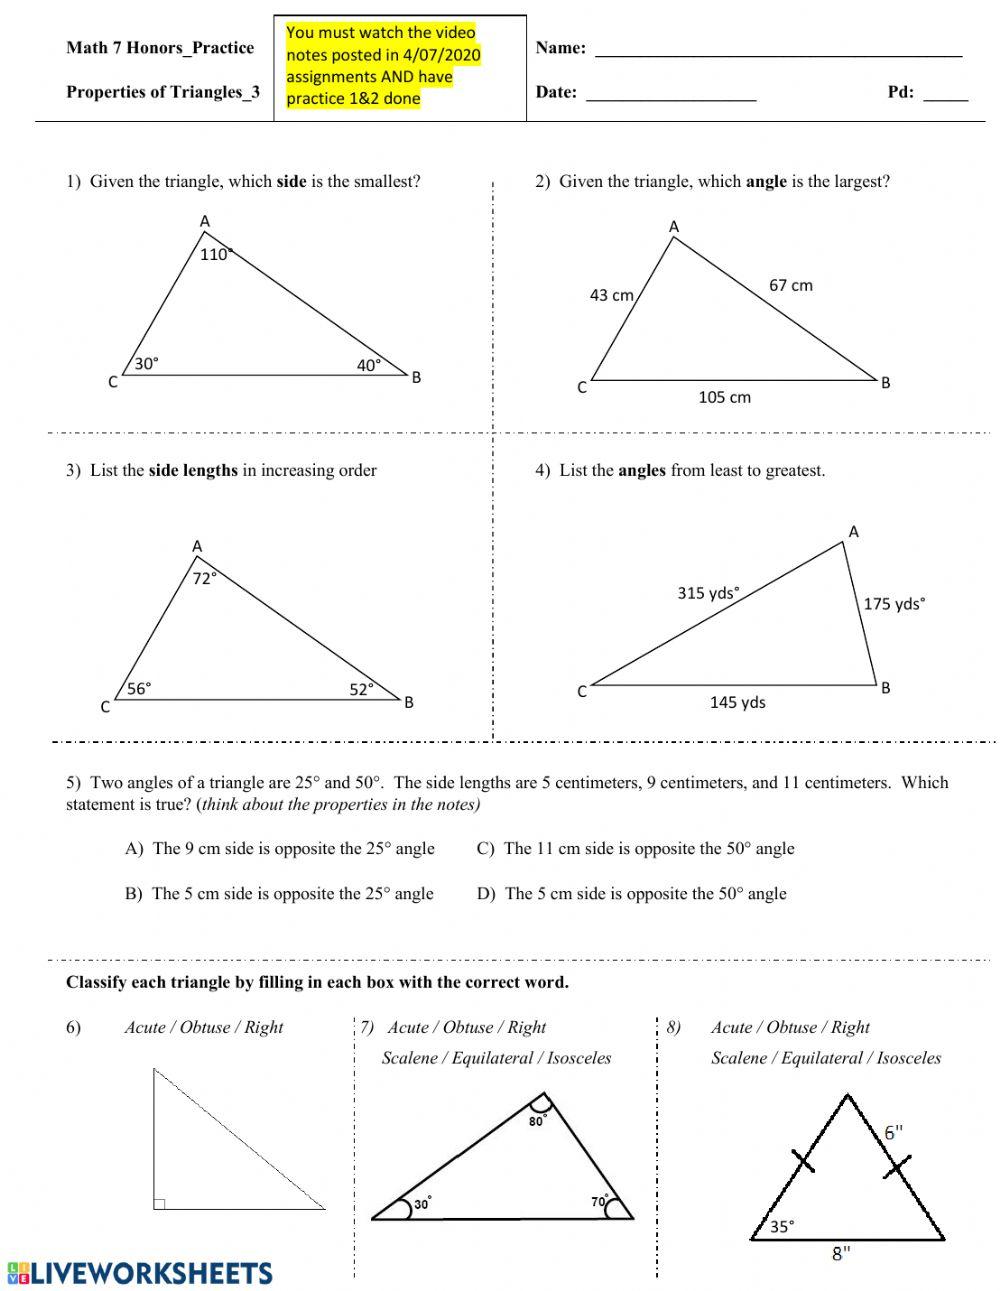 Triangle basics 3